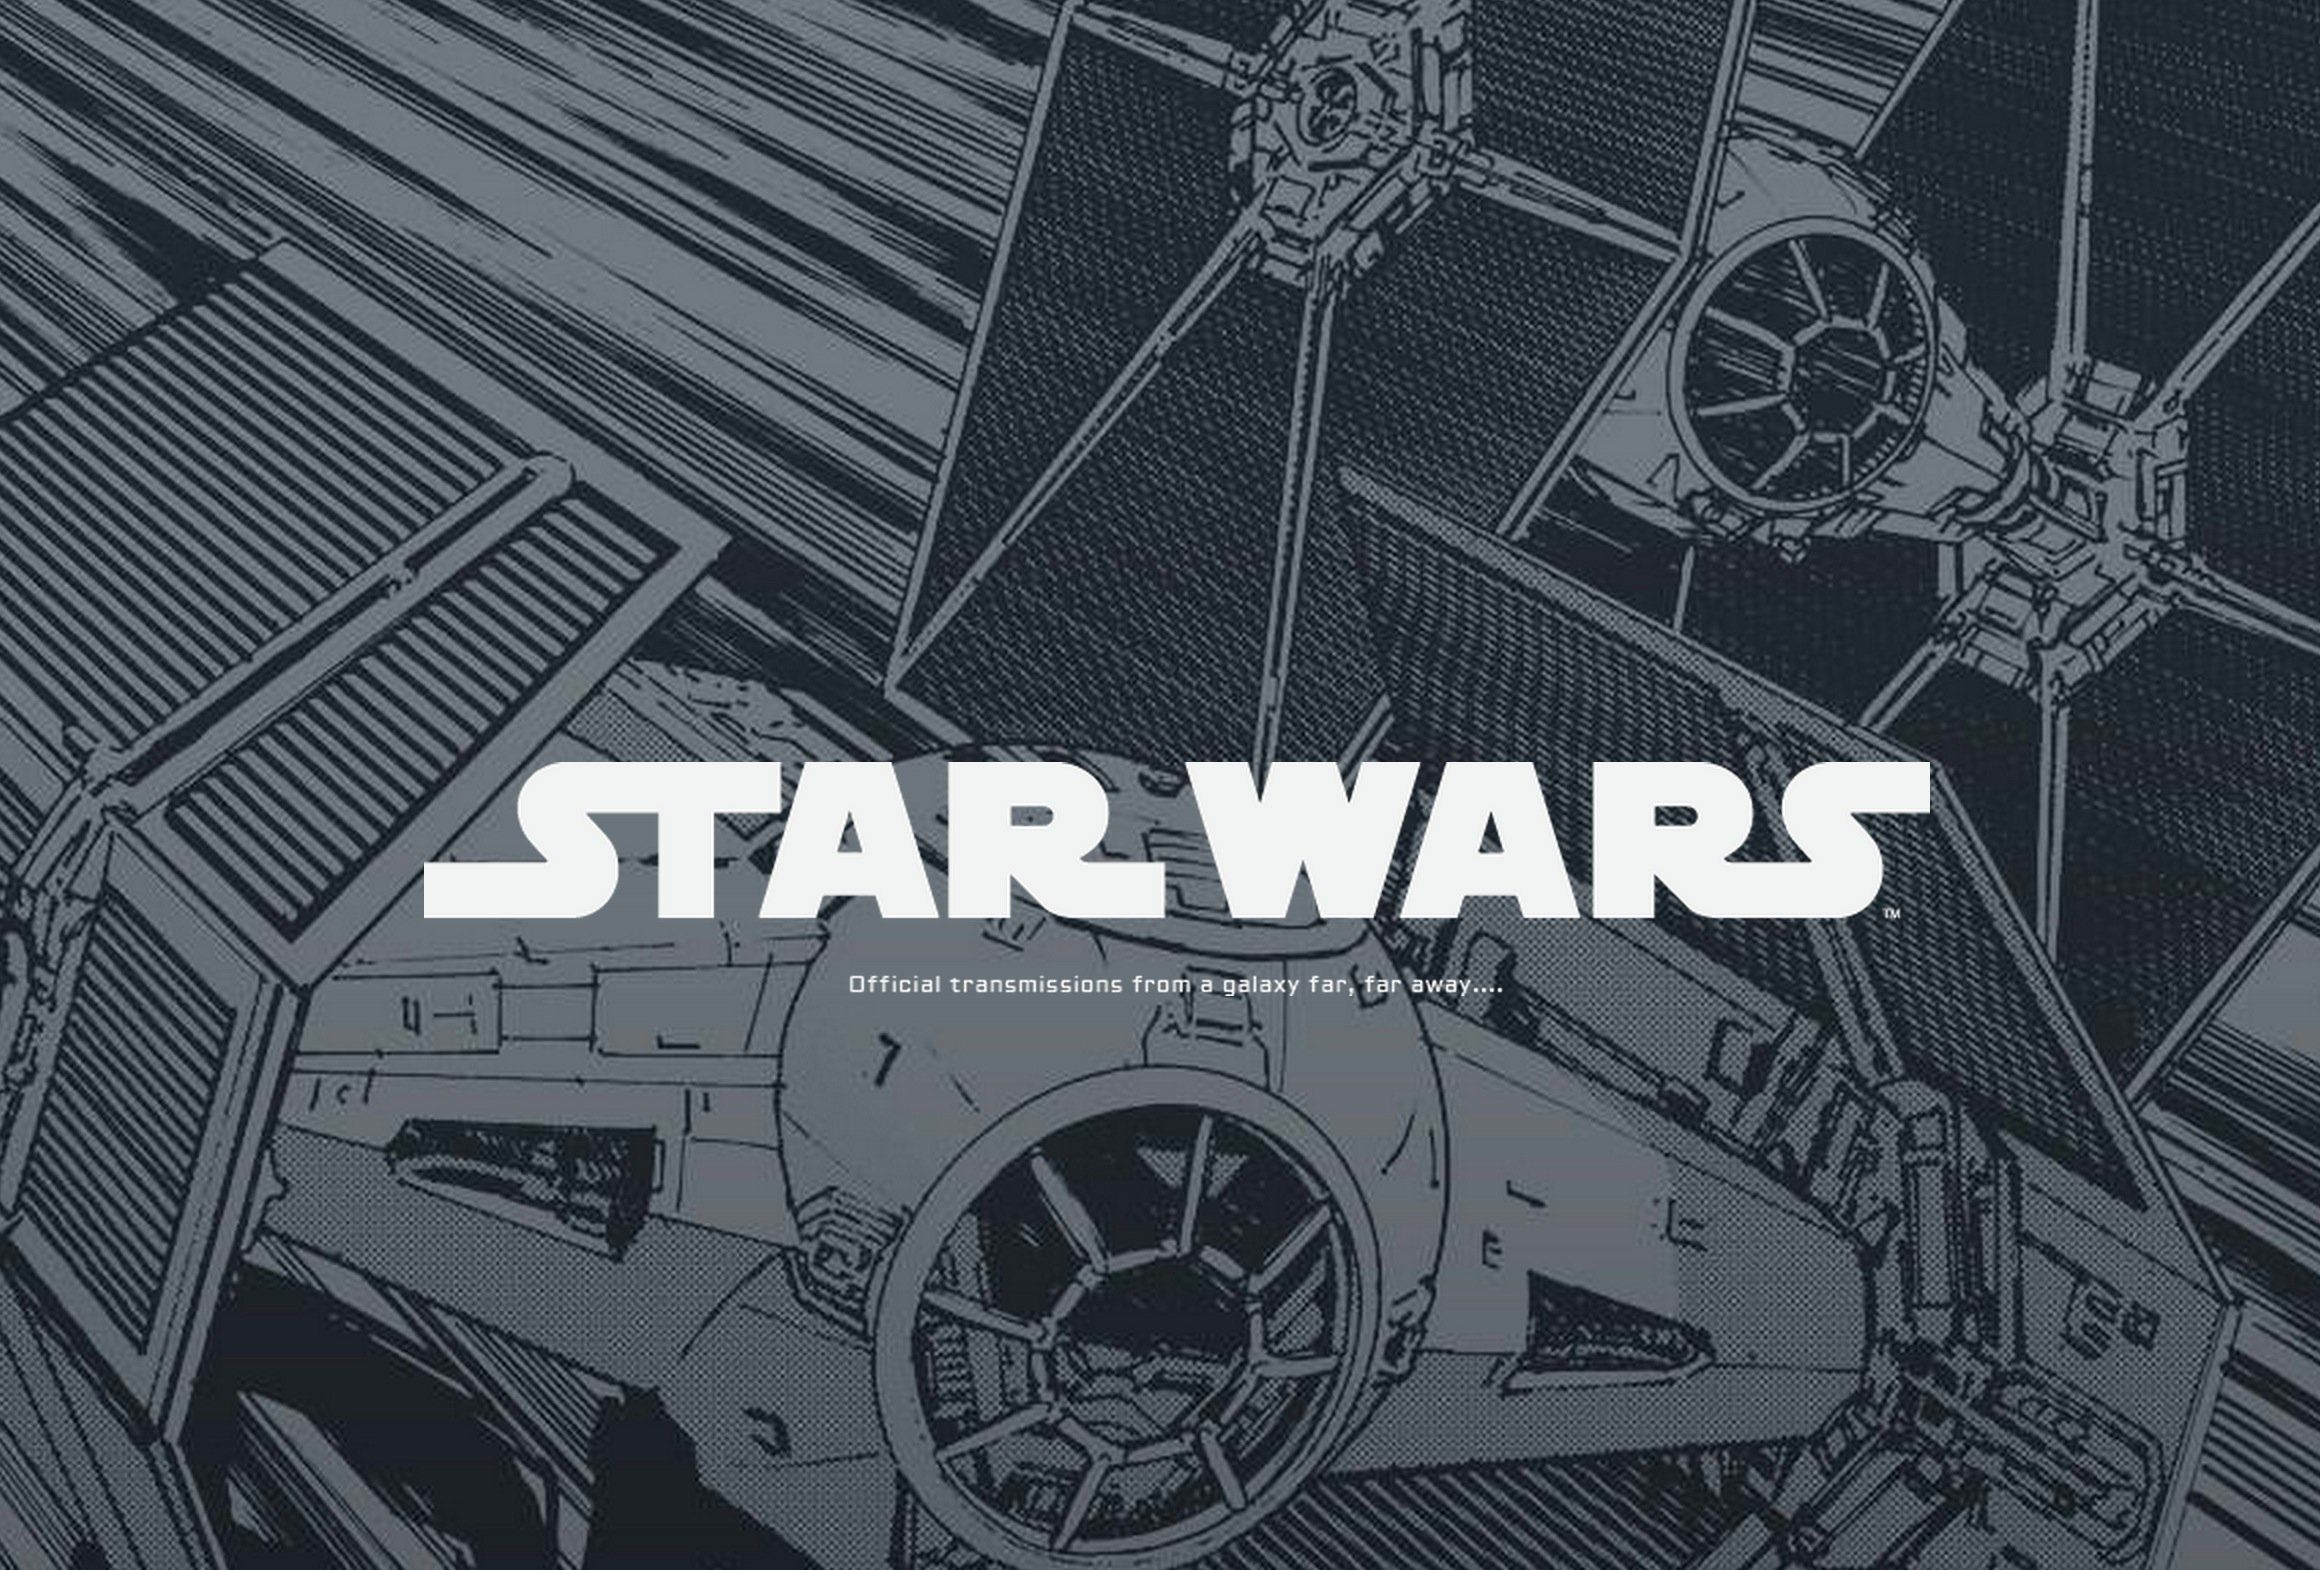 Star Wars continues marketing push with Tumblr comics, art